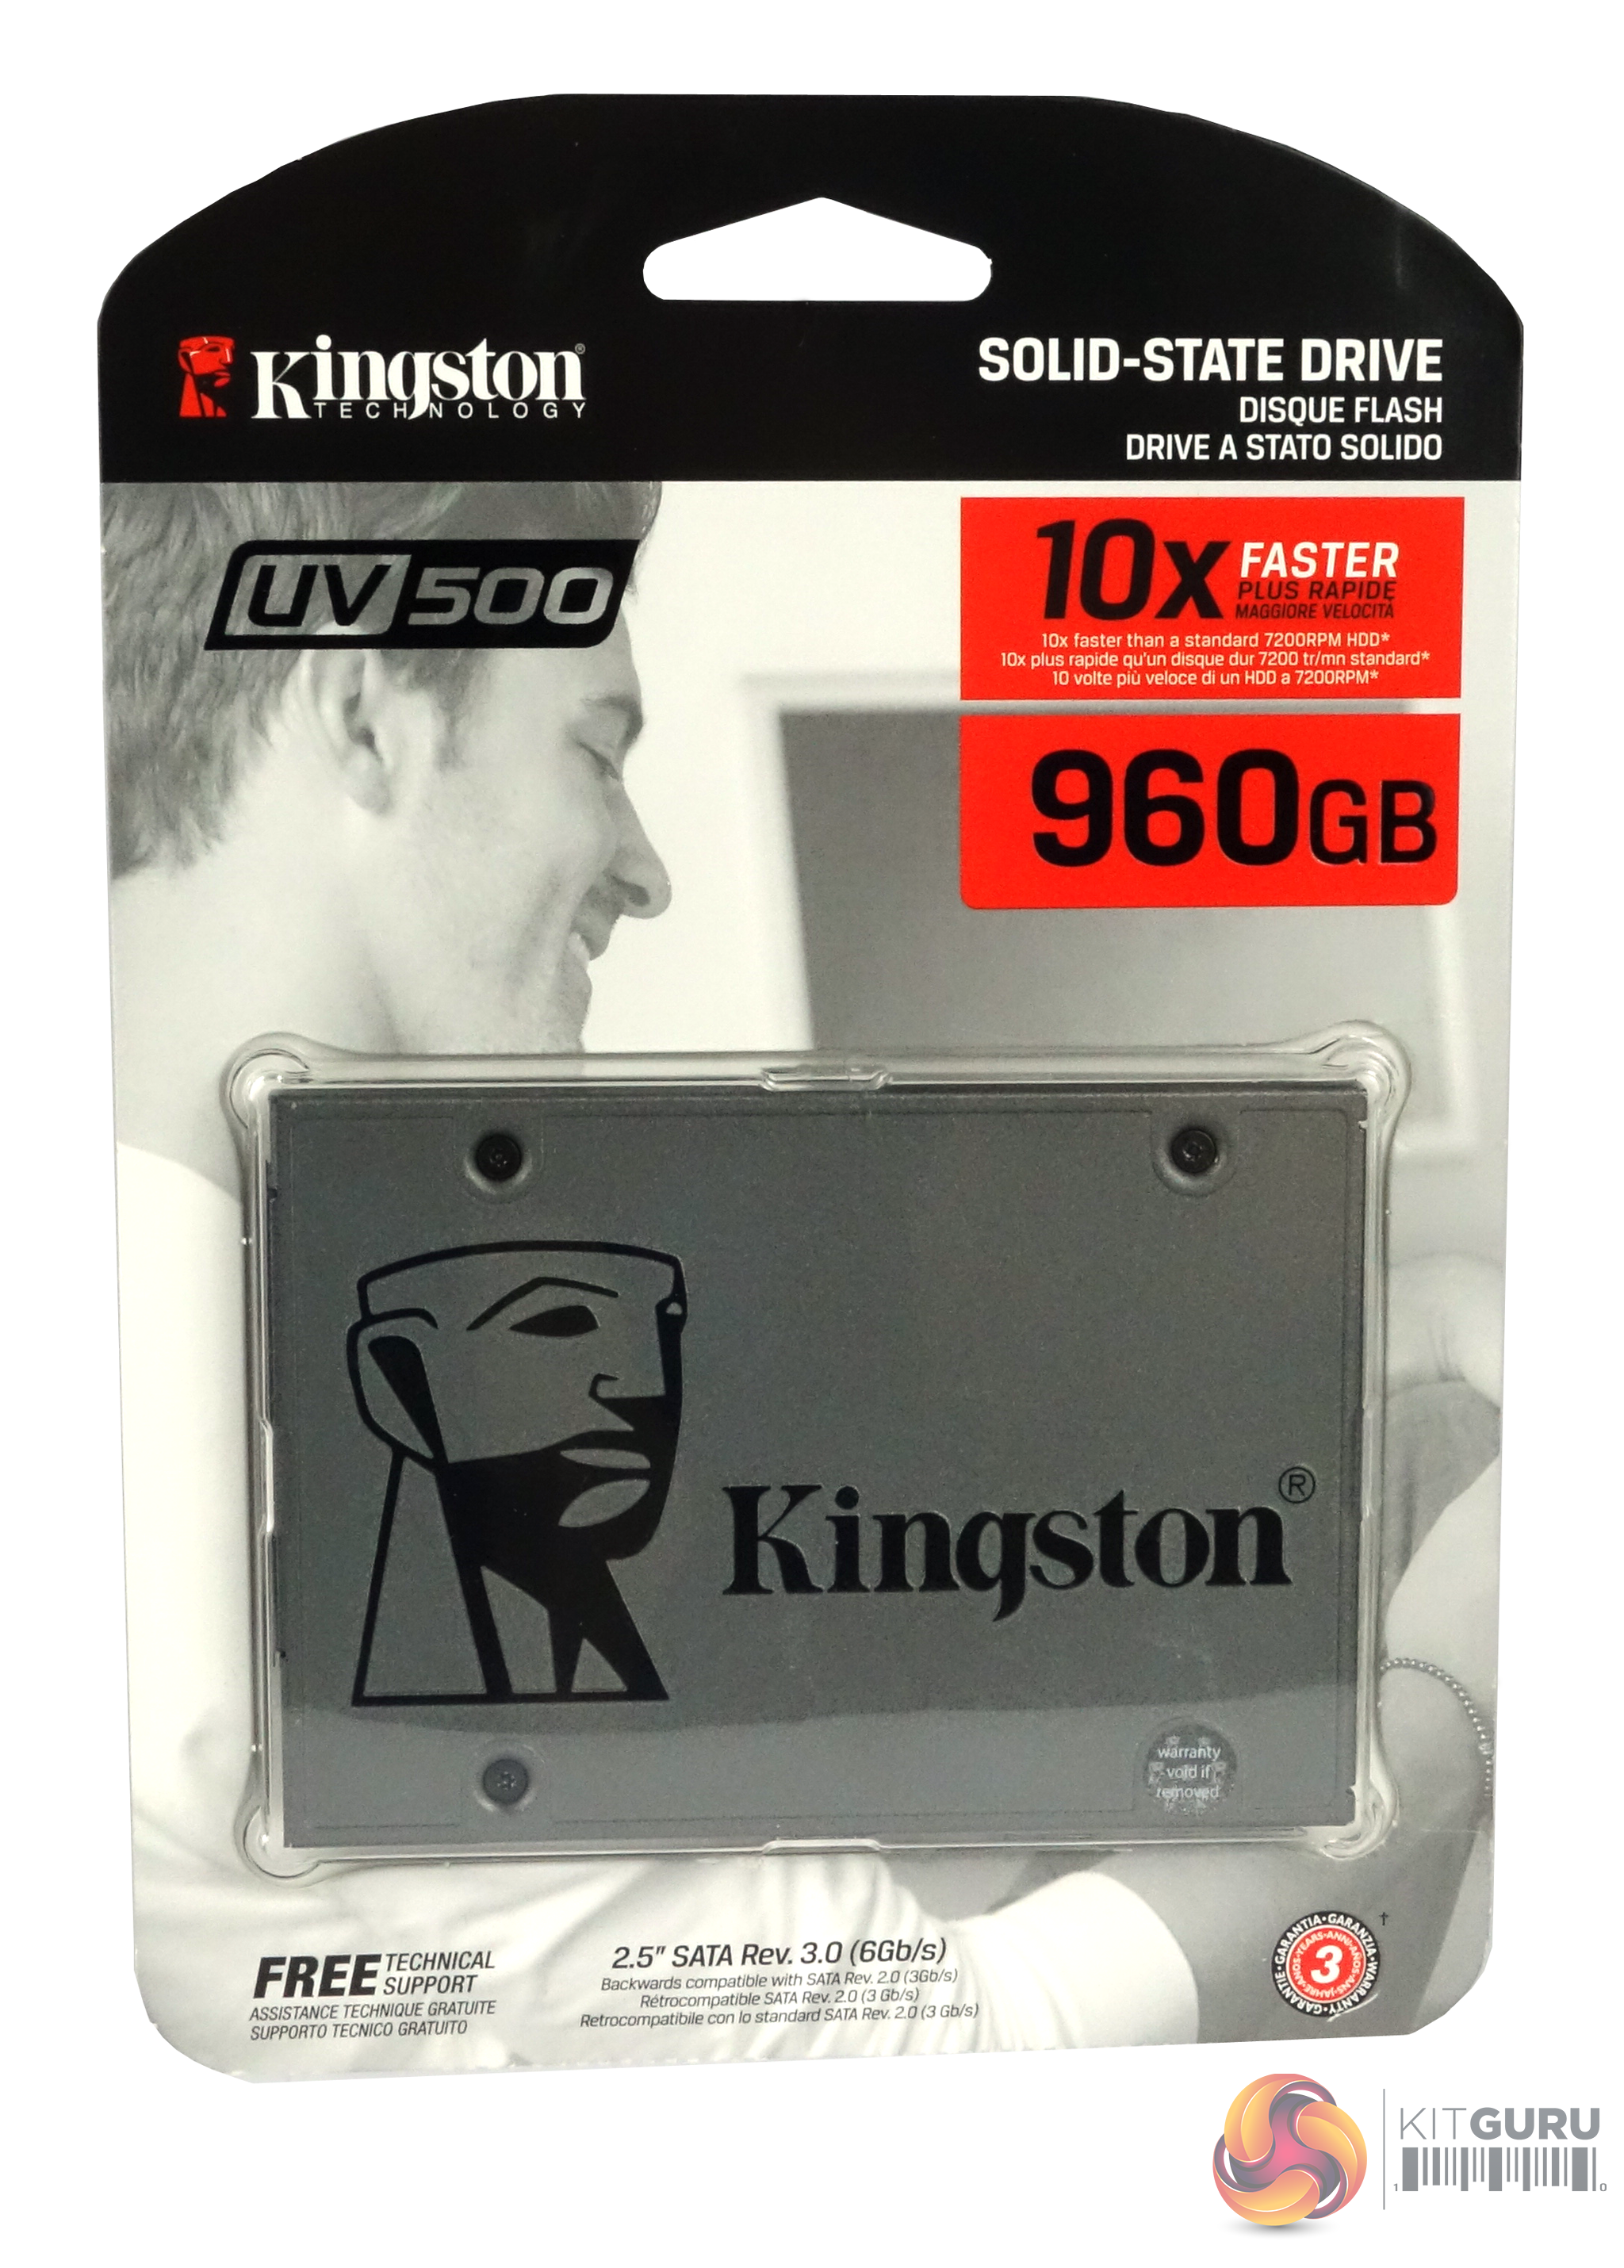 marionet mord afrikansk Kingston UV500 960GB SSD Review | KitGuru- Part 2